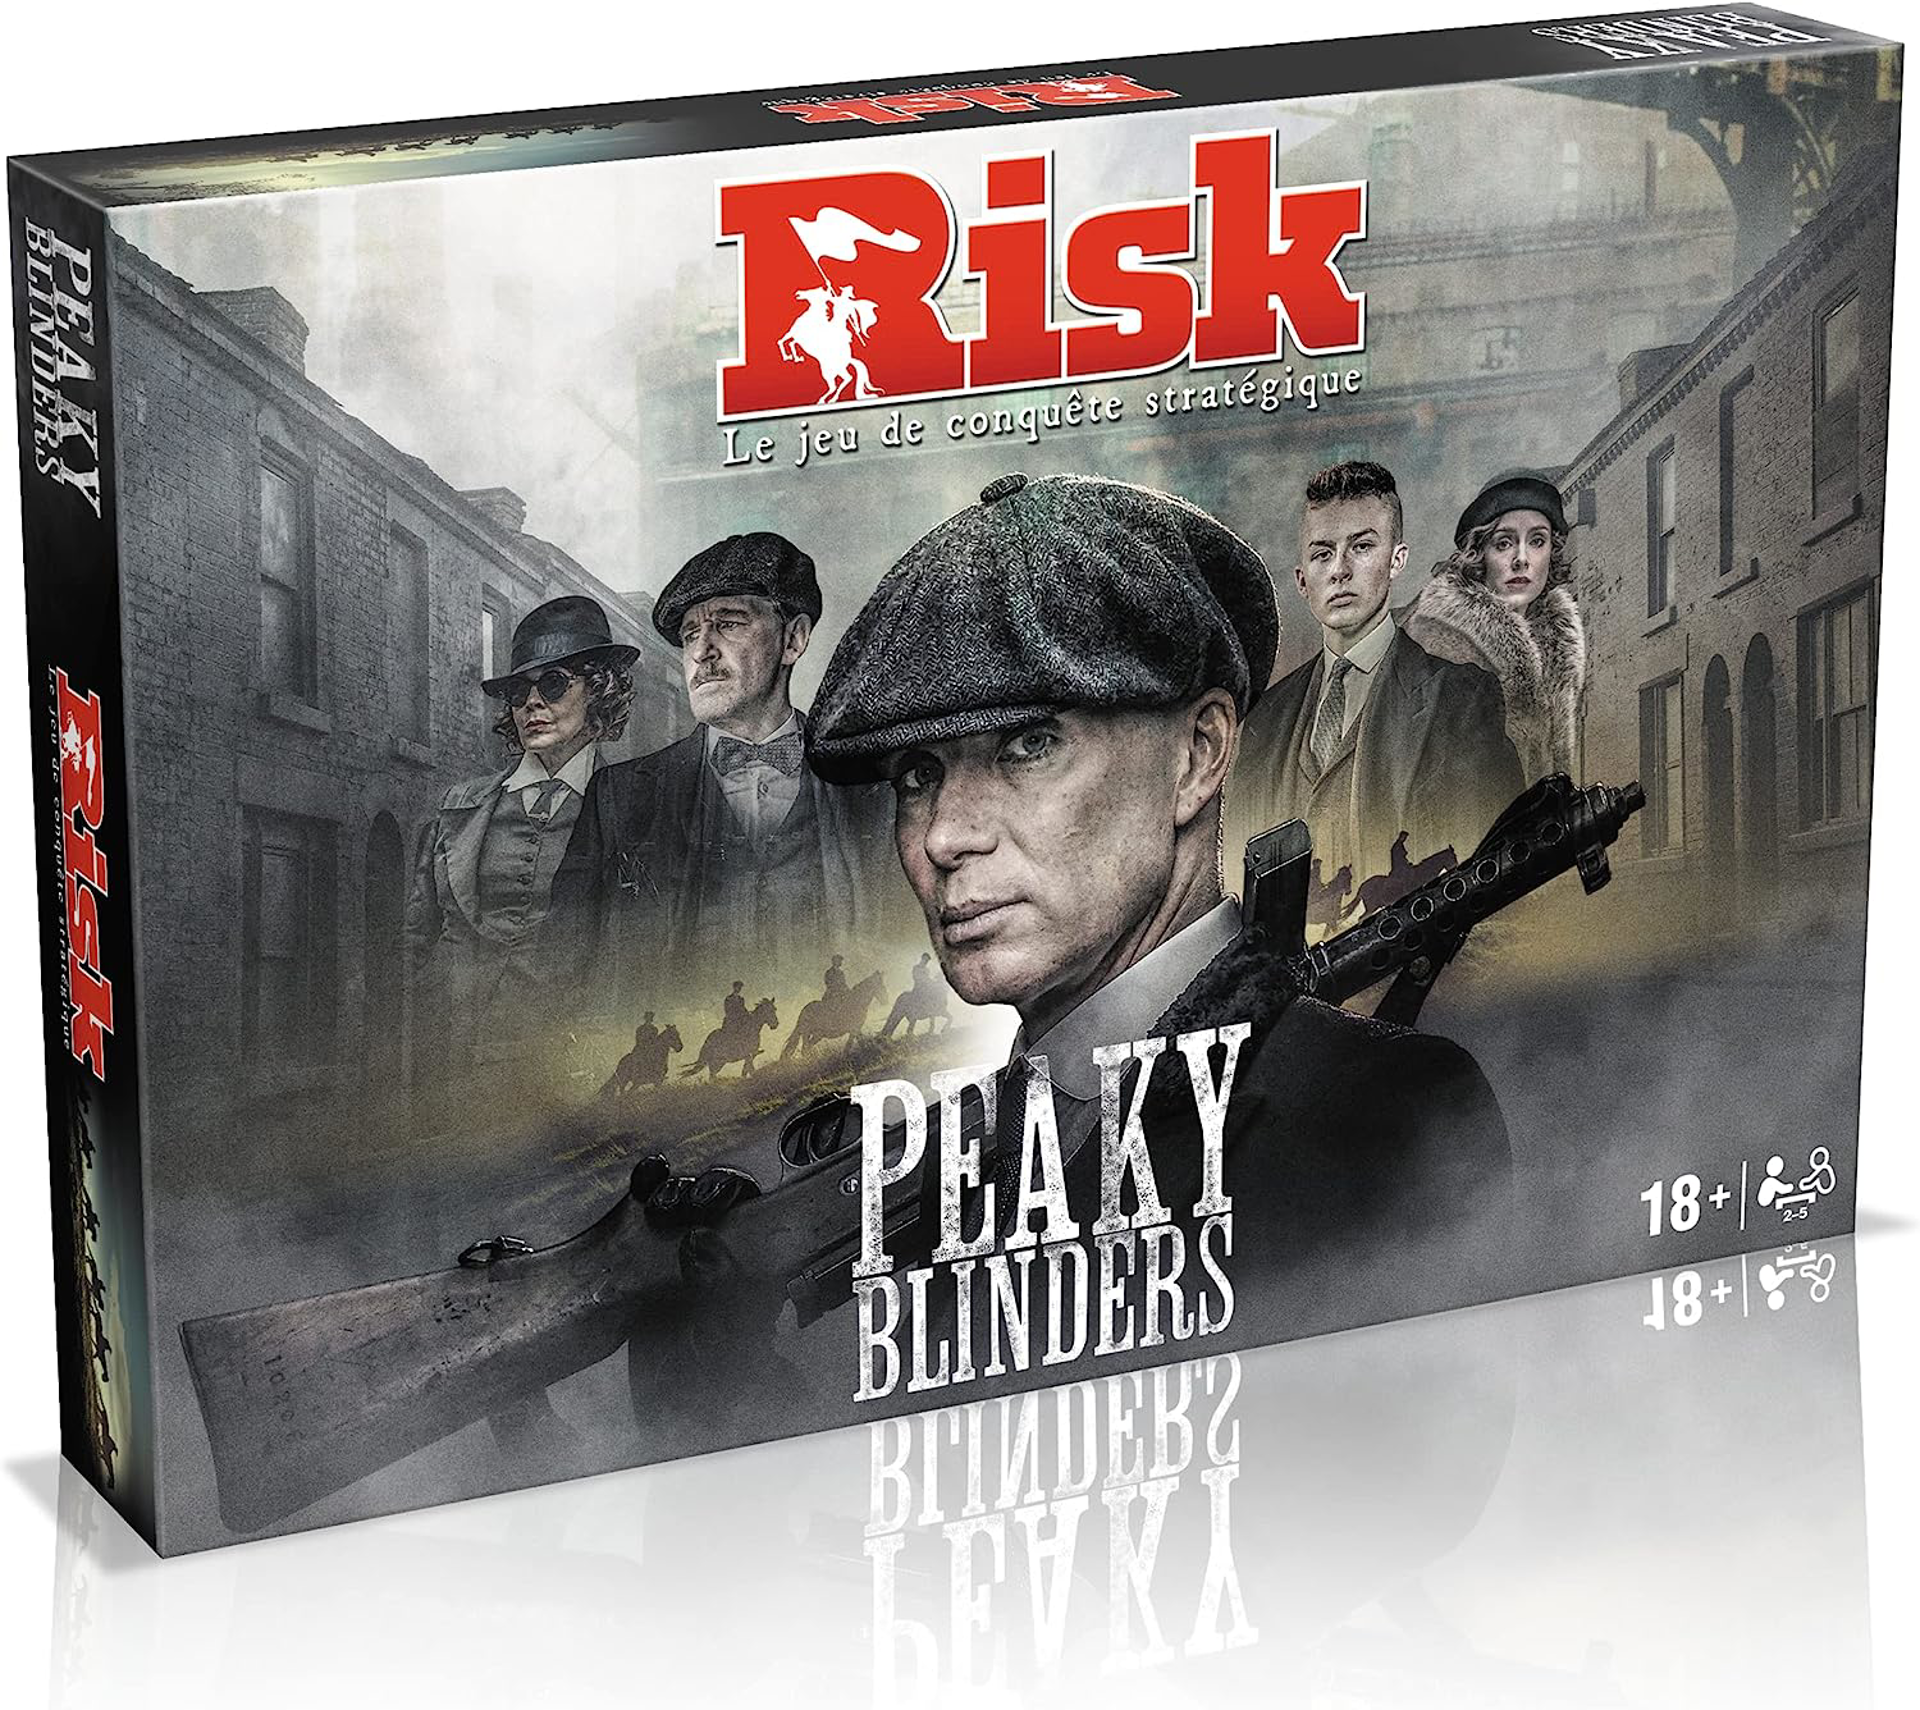 Risk - Peaky Blinders Edition